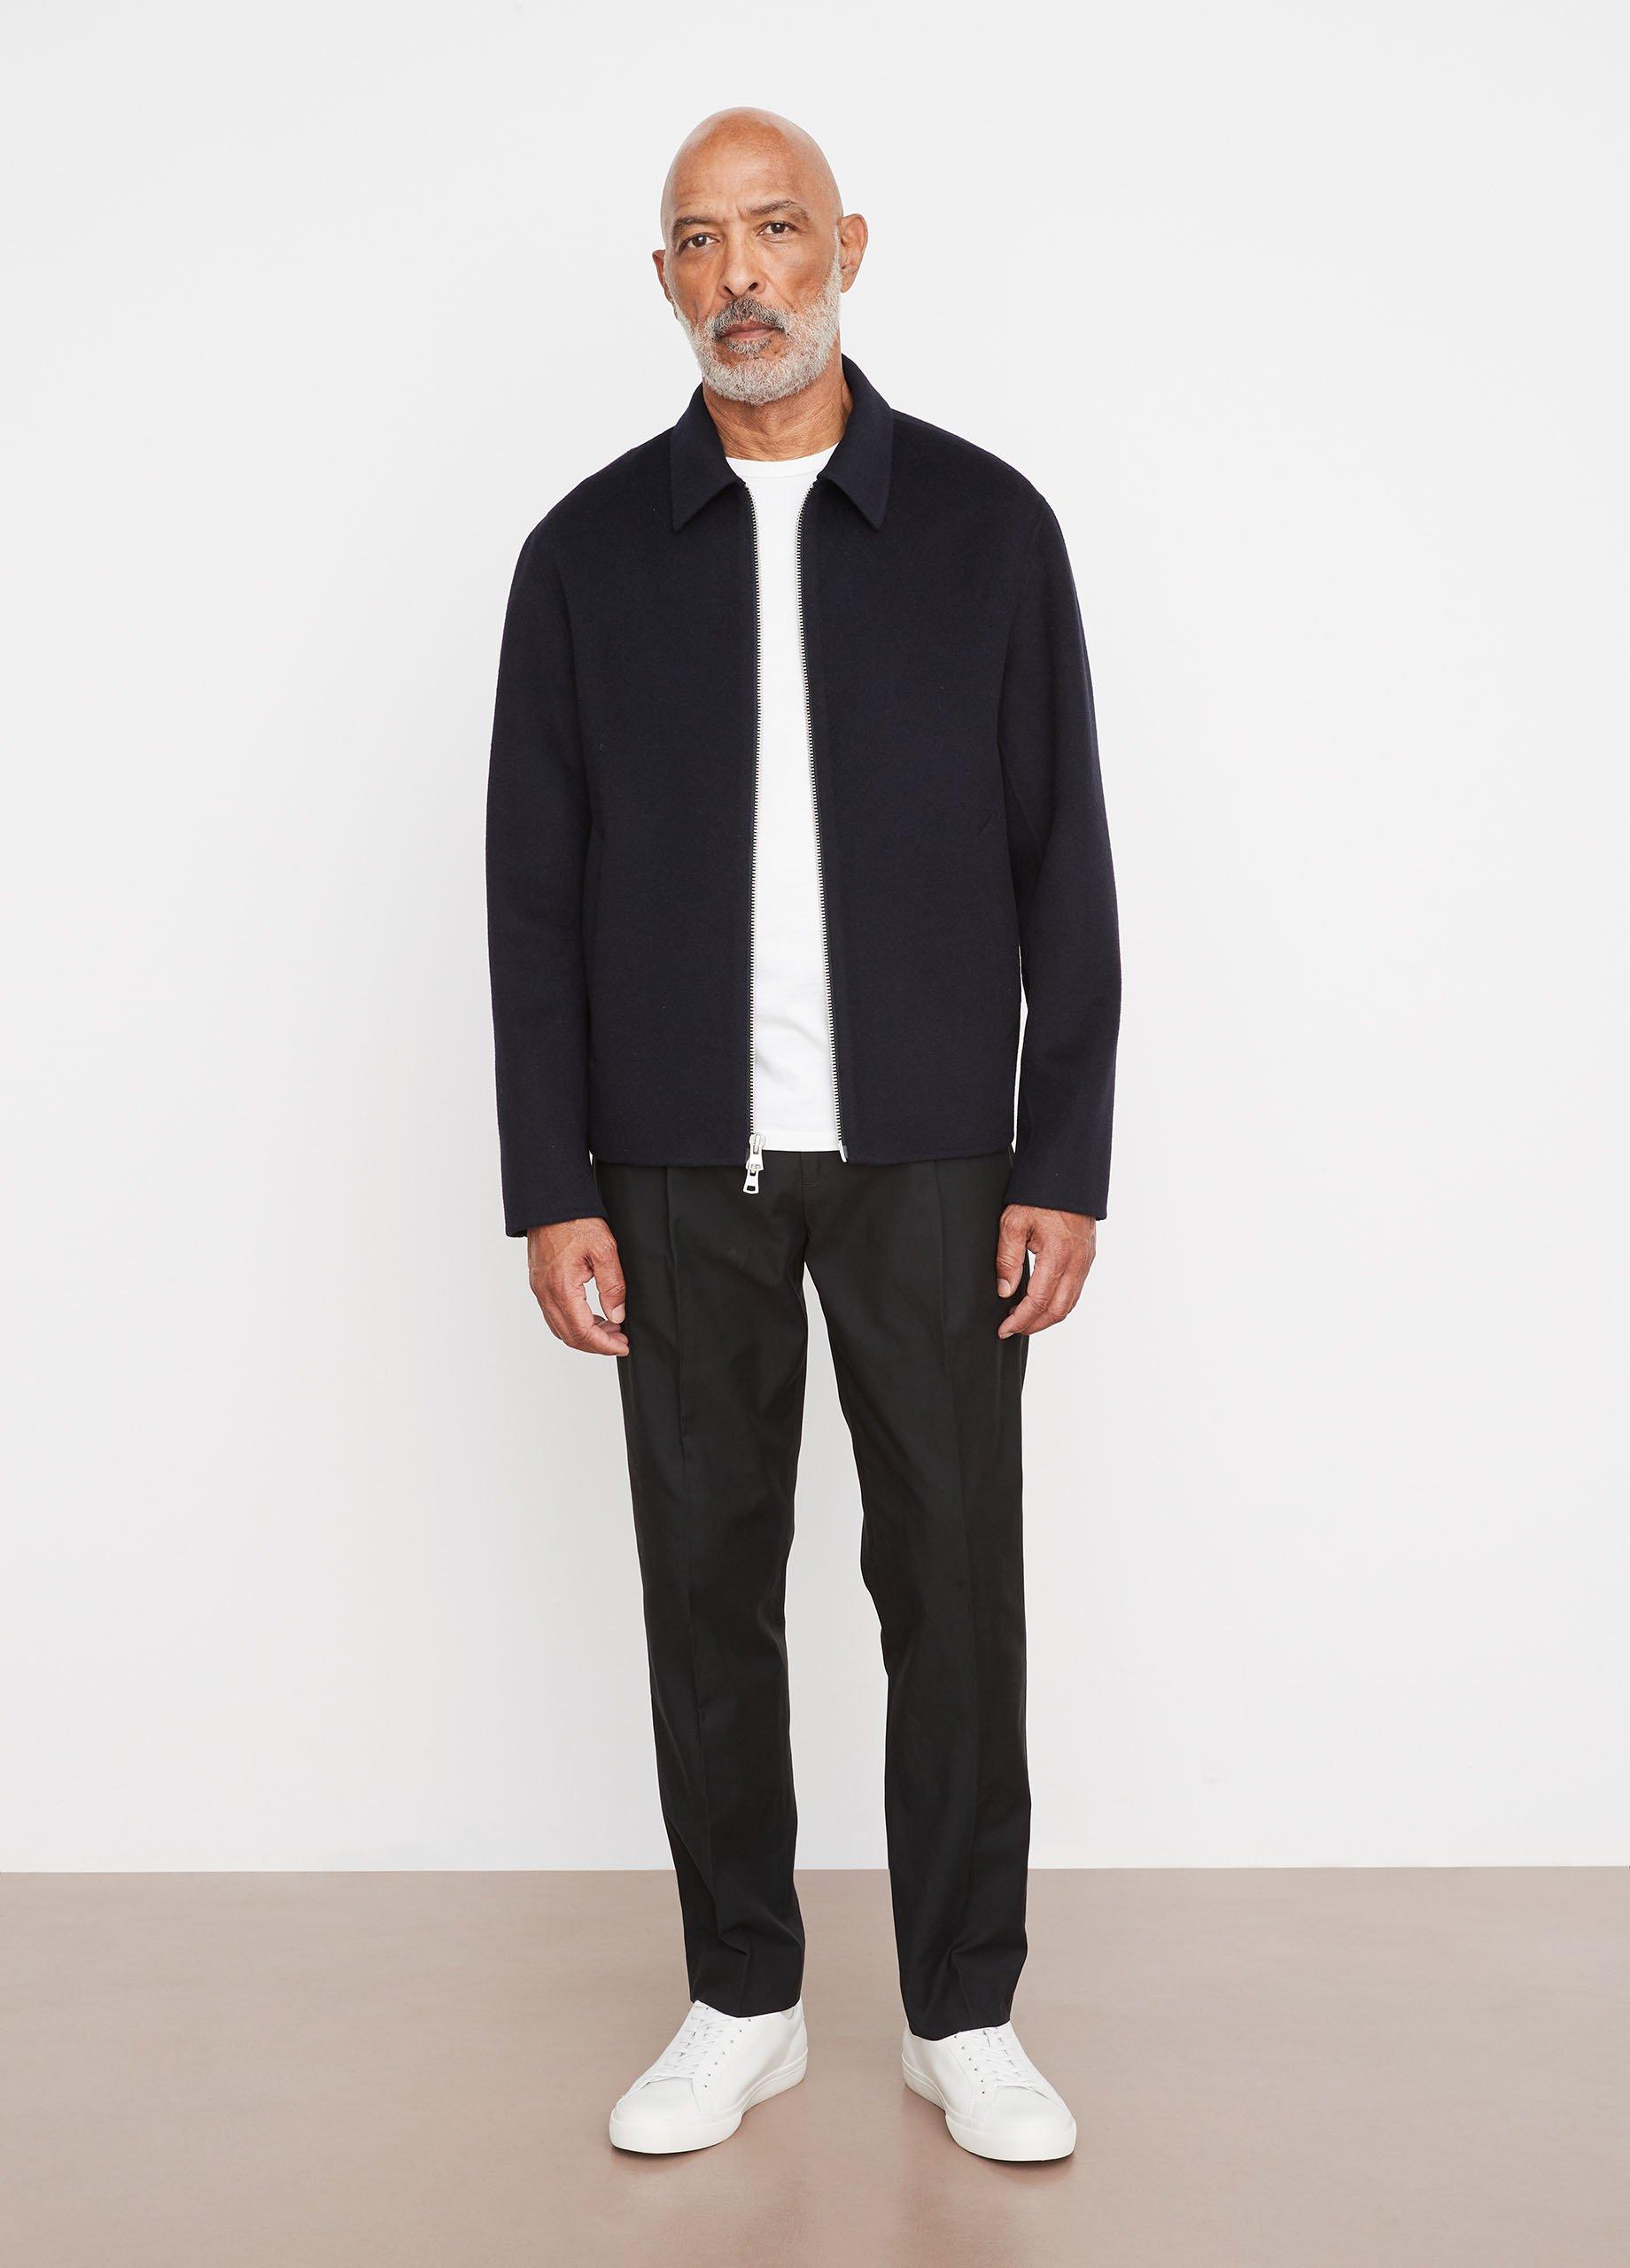 Splittable Wool-Blend Zip-Up Jacket in Vince Products Men | Vince